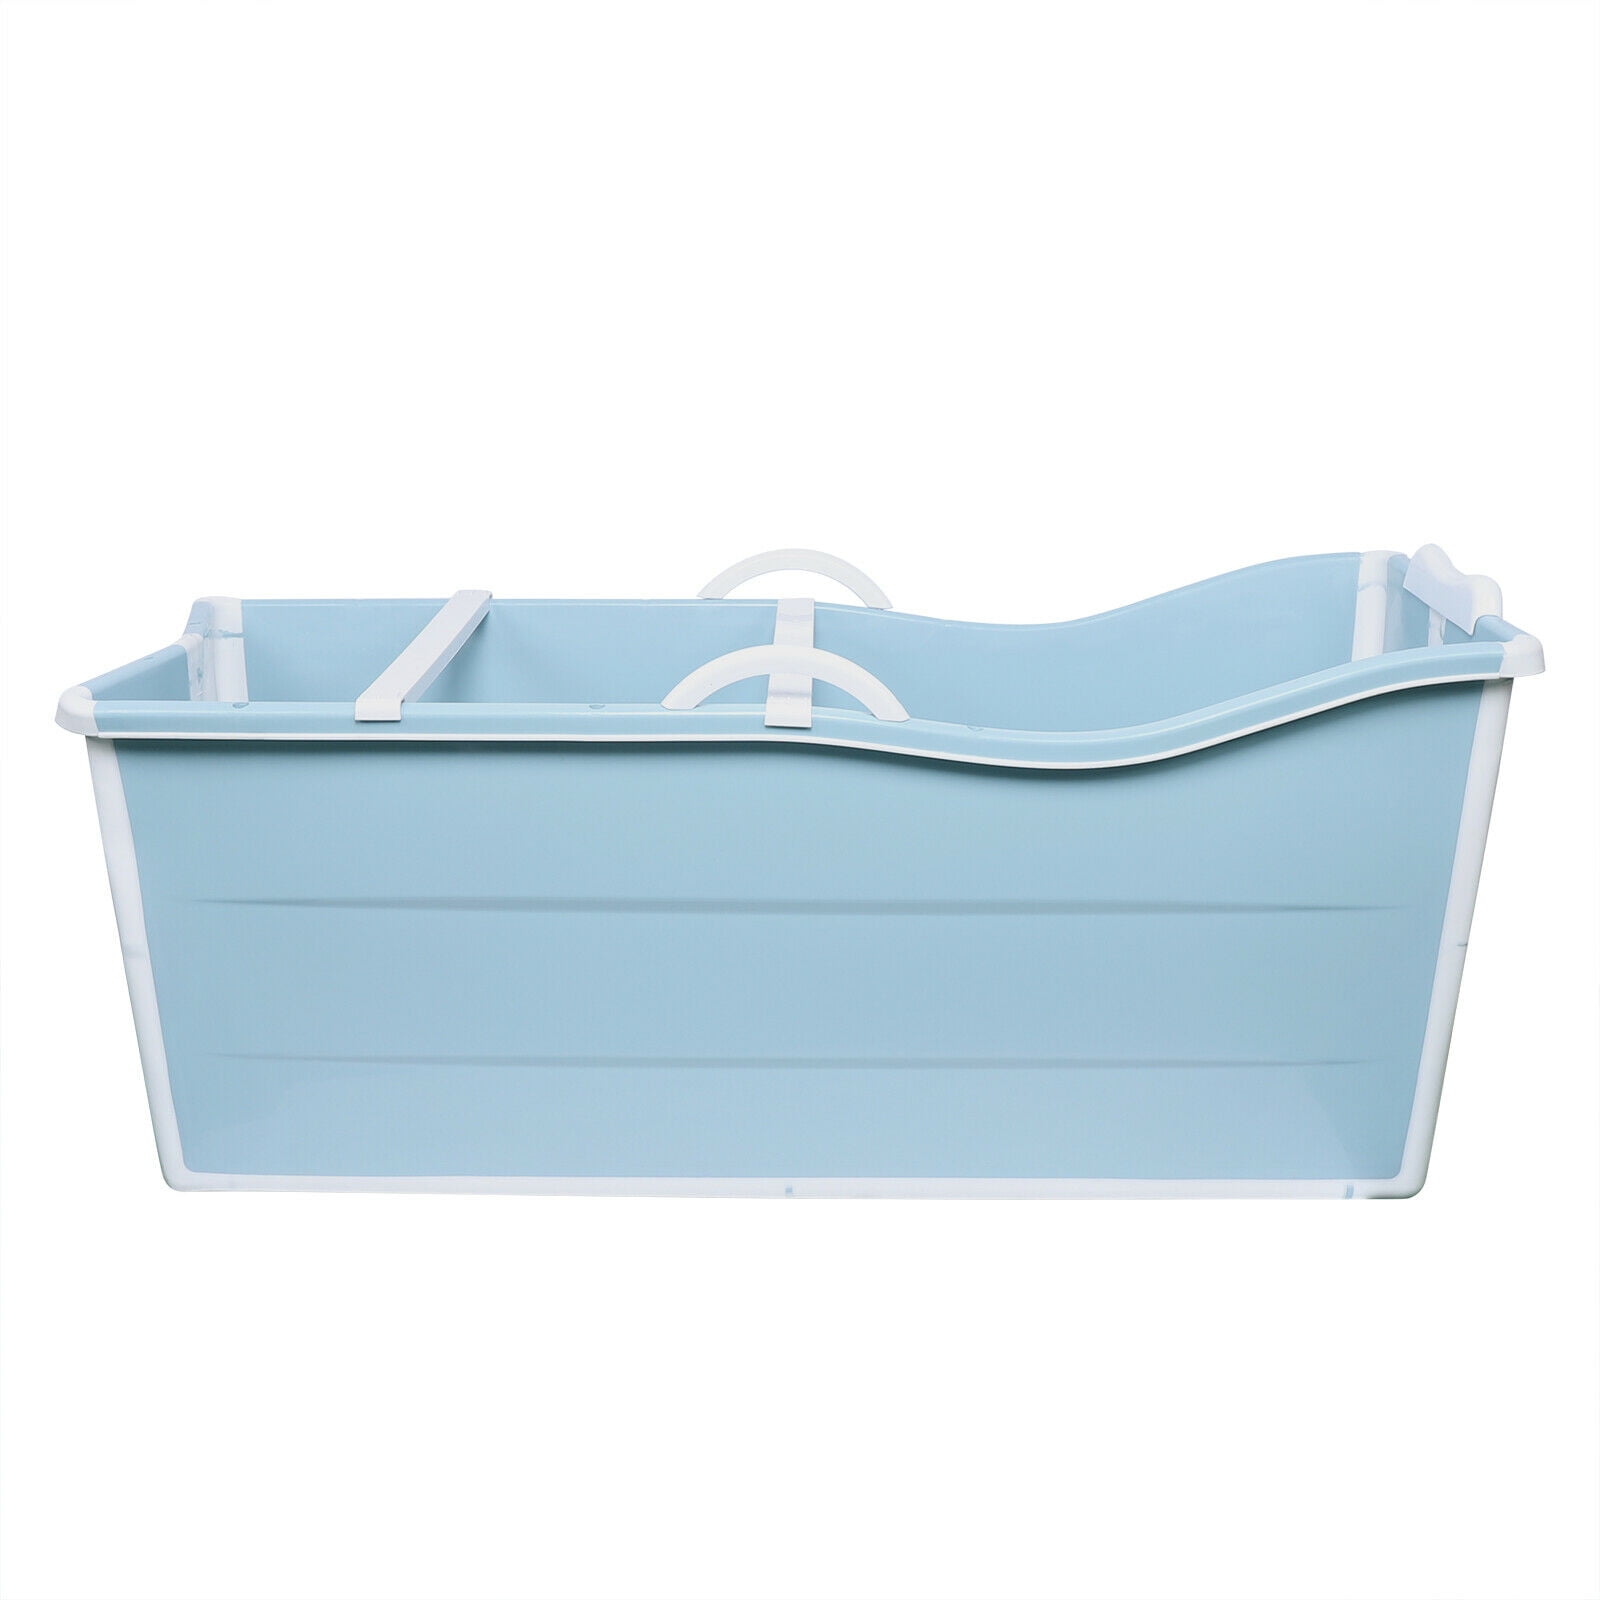 S SMAUTOP Adult Portable Massage Bathtub with Thermostatic Cover Blue 54.3 inches Foldable Childrens Bathtub Household Bathtub Shower Room Soaking Bathtub